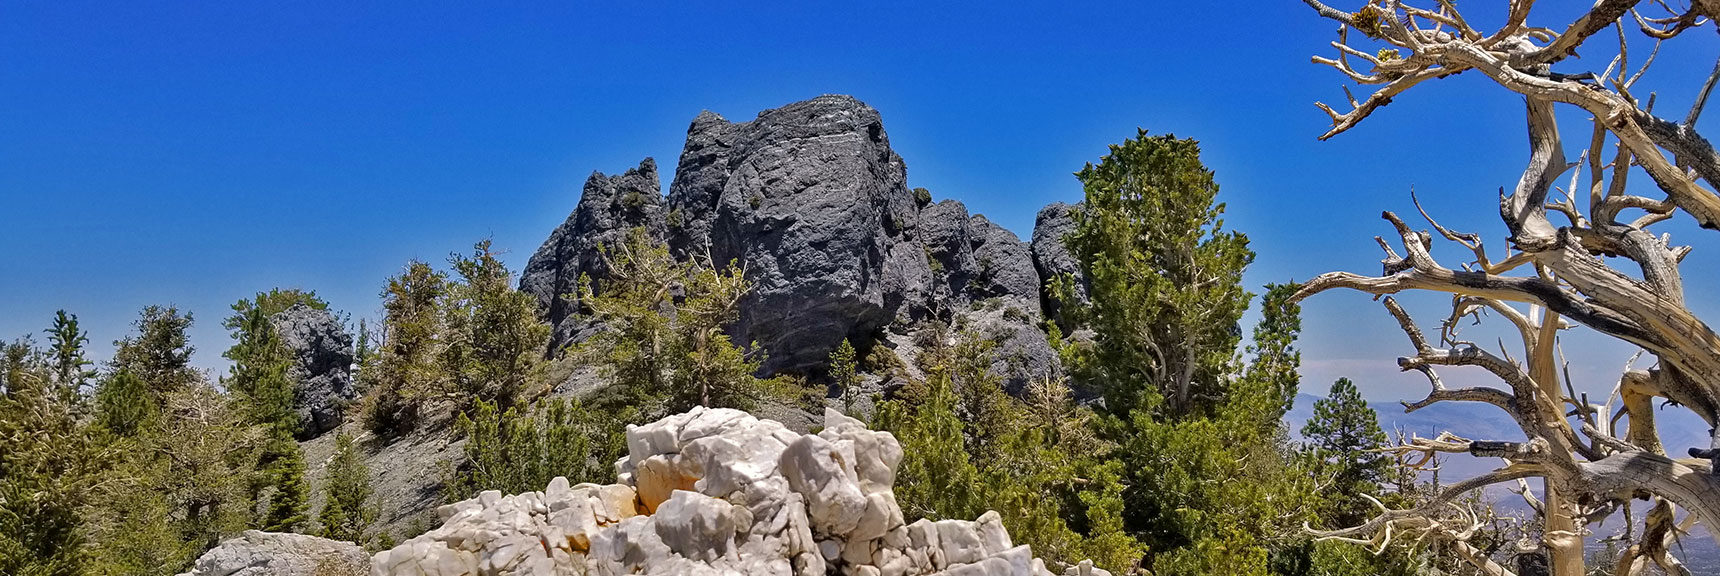 Black Rock Sister | Mt Charleston Wilderness | Lee Canyon | Spring Mountains, Nevada